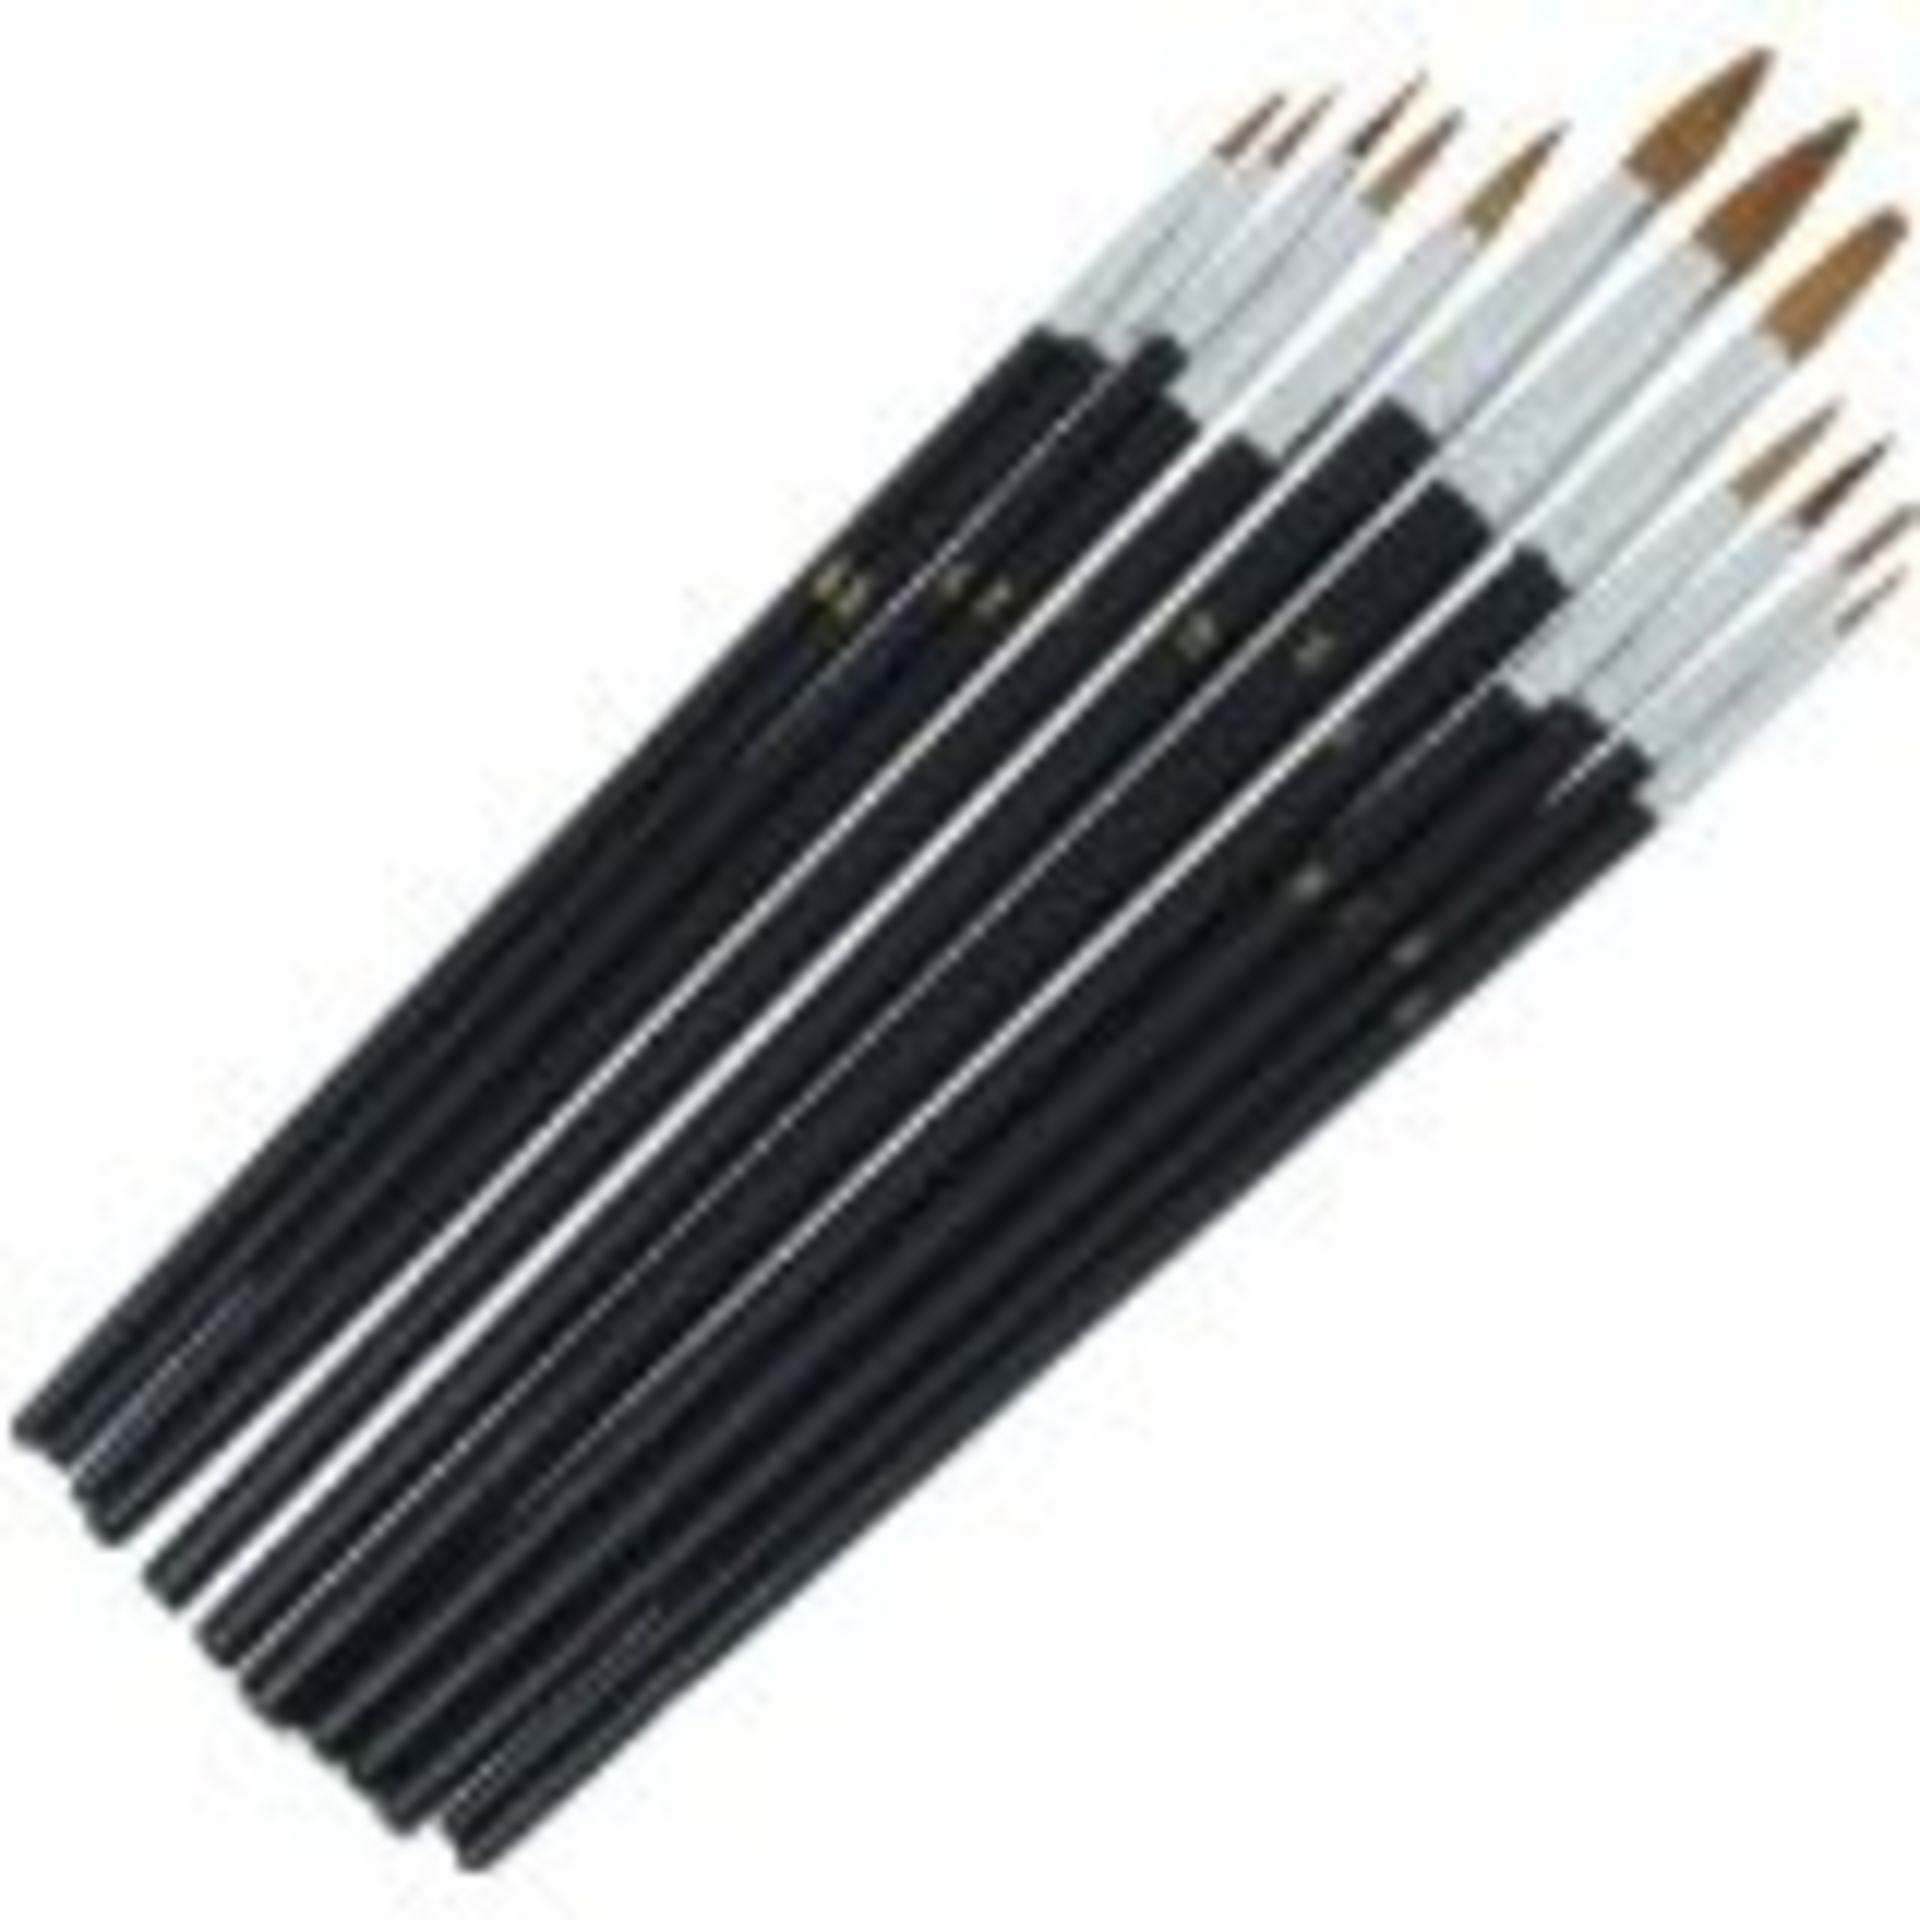 V Brand New 12pc Artist Watercolour Brush Set And 15pc Art Brush Set - Image 2 of 2